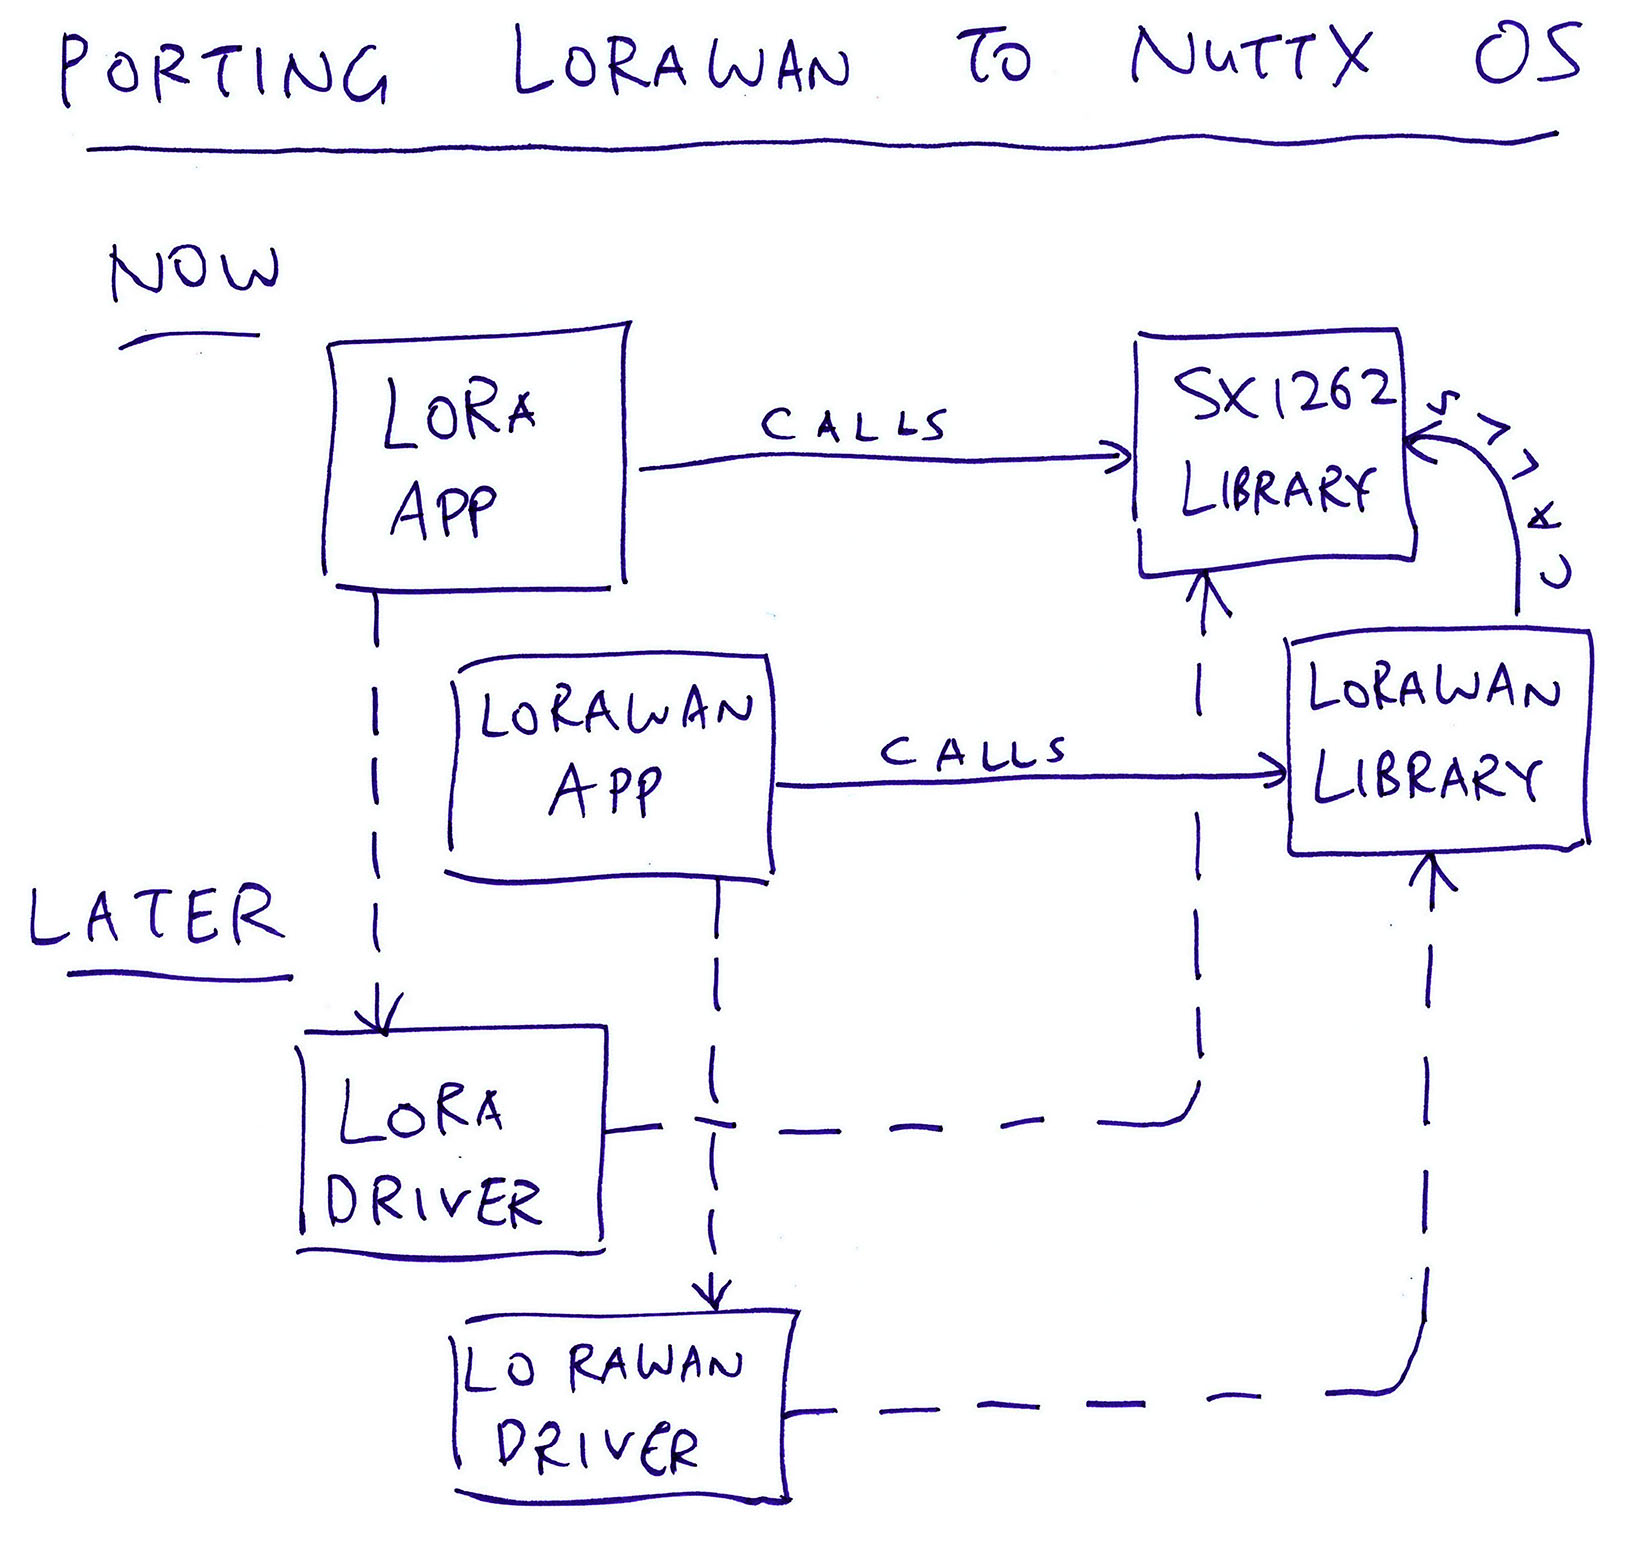 Porting LoRaWAN to NuttX OS